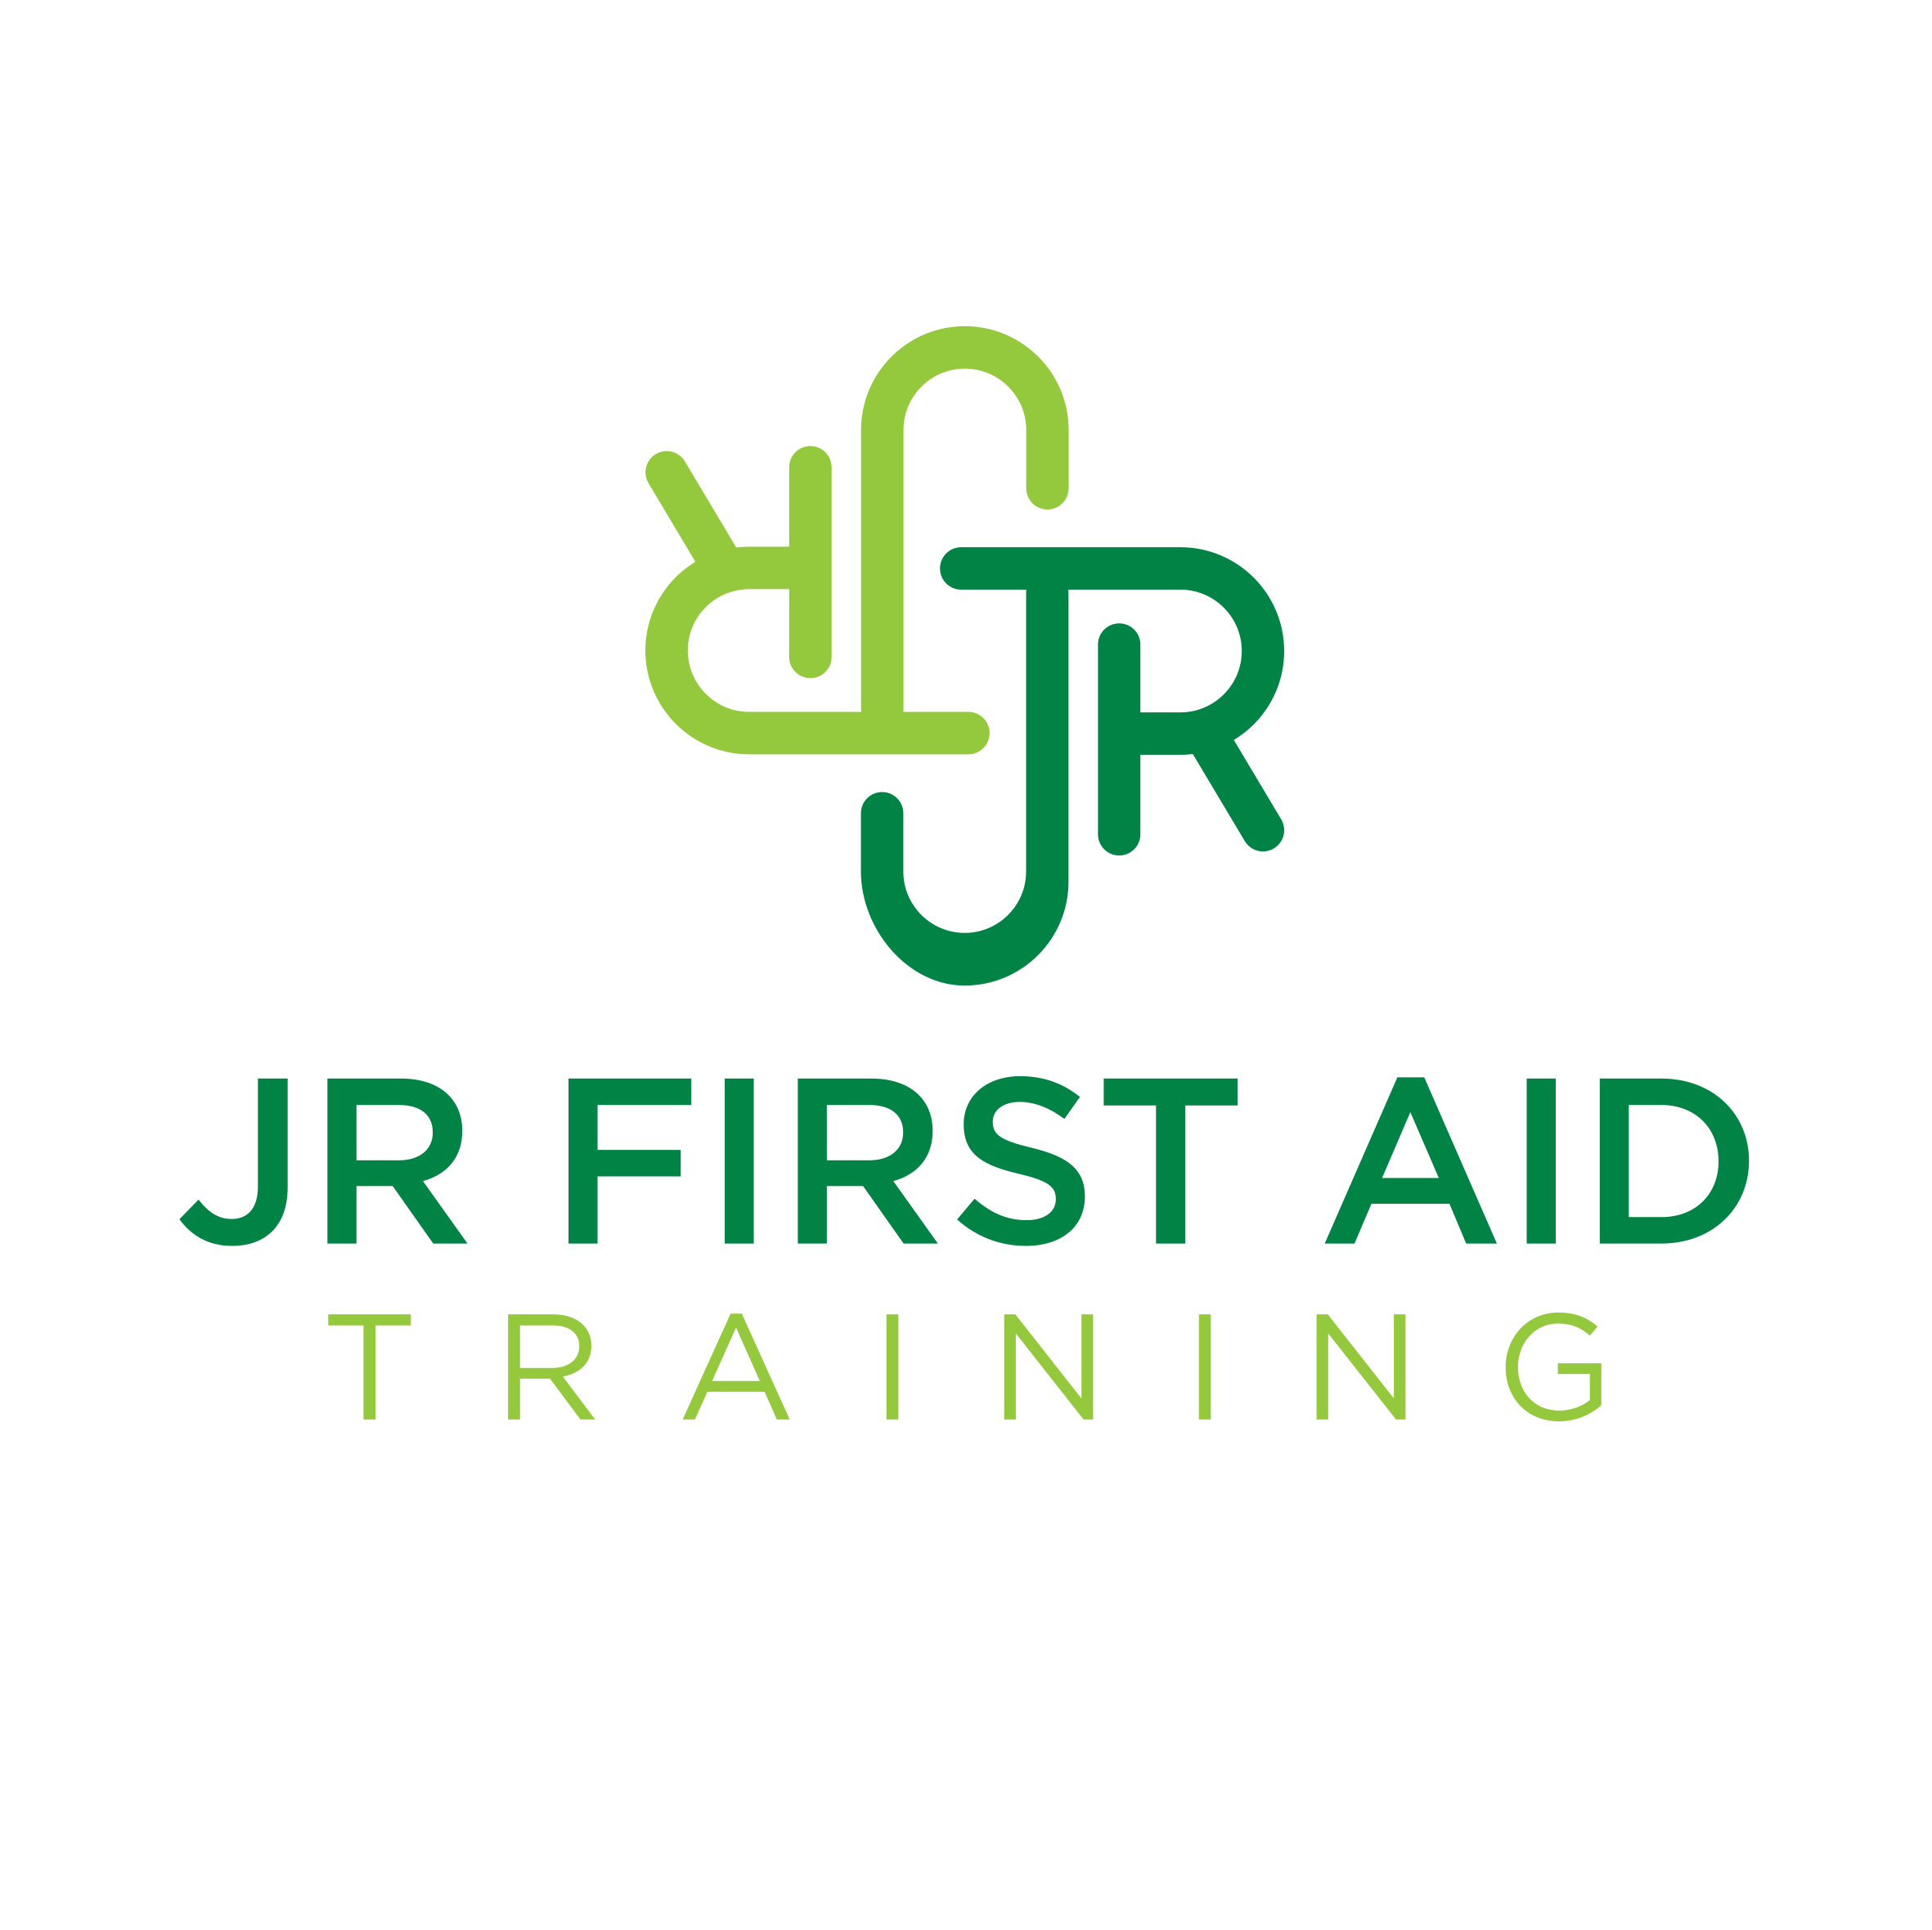 JR First Aid Training 's logo